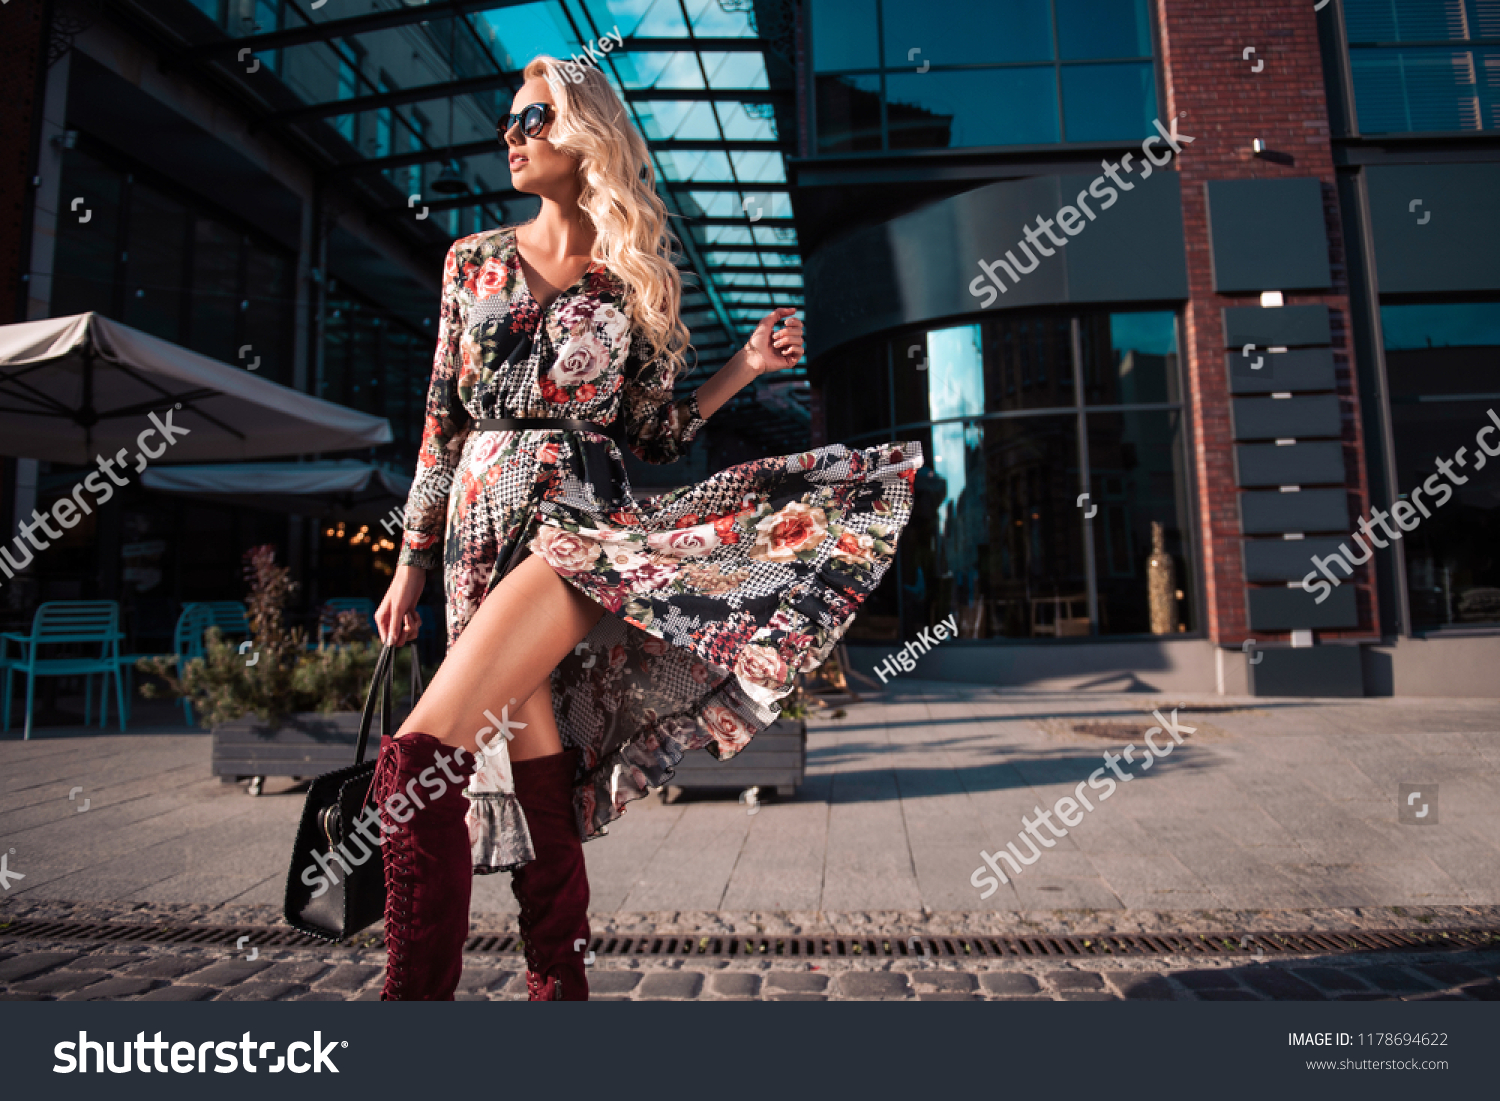 Beautiful fashionable woman walking in the street, wearing sunglasses, nice dress, high heels boots, handbag. Fashion urban autumn photo. #1178694622